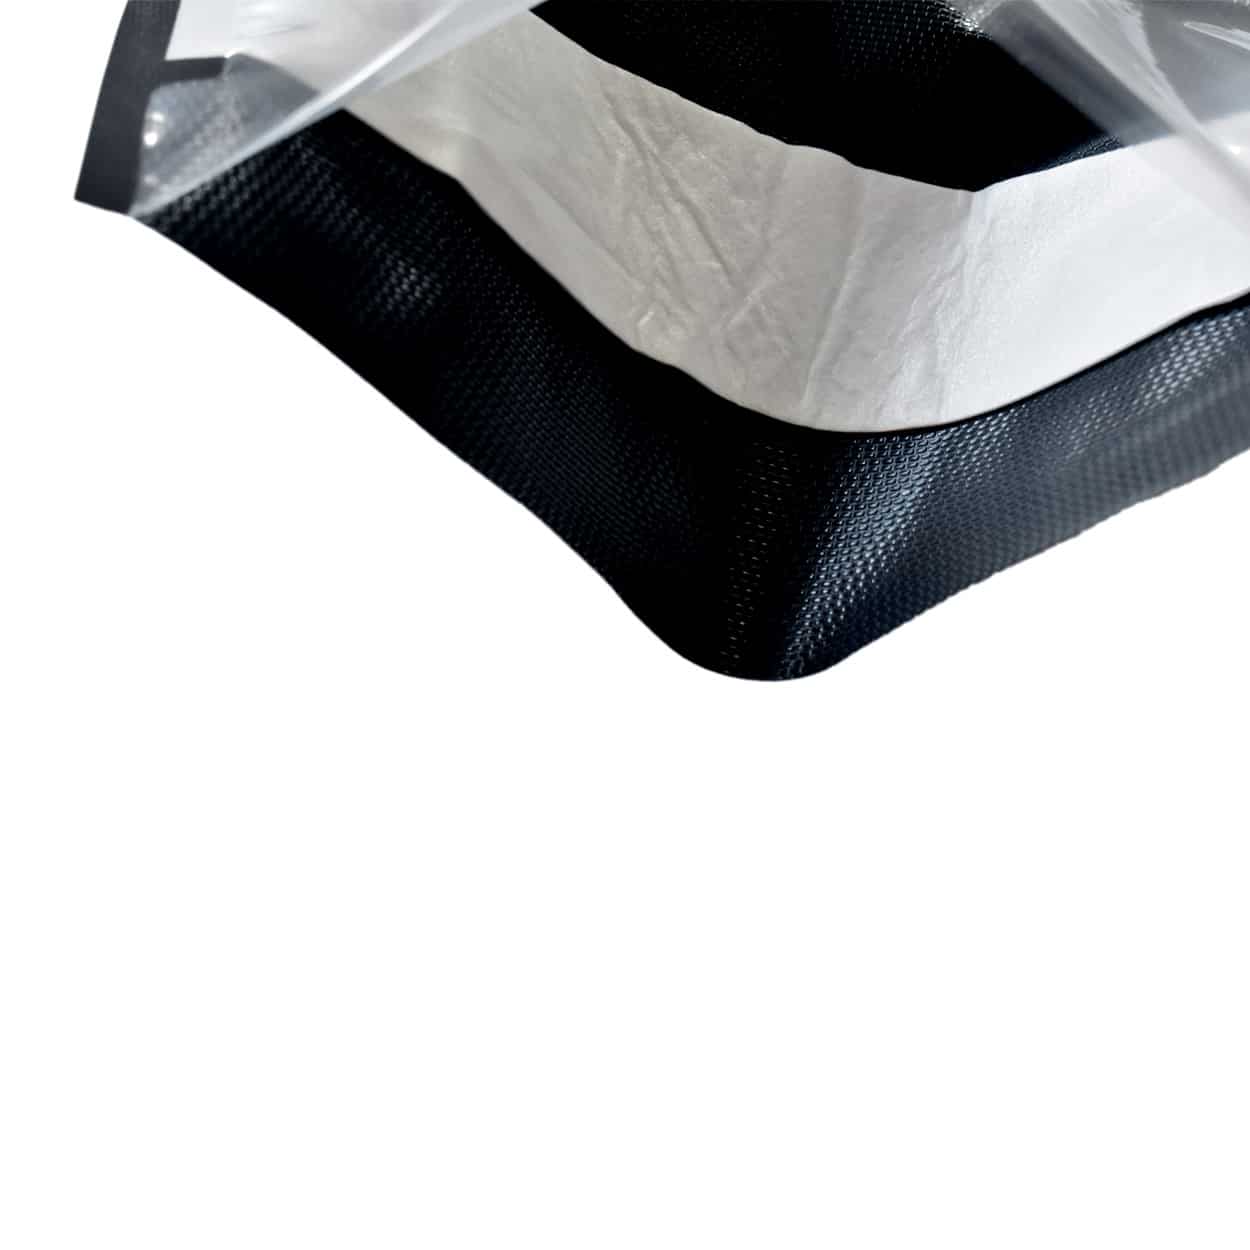 Shield N Seal® SNS 2200 15 x 20 50ct Vacuum Sealer Bags (Clear) – Perris  hydroponics